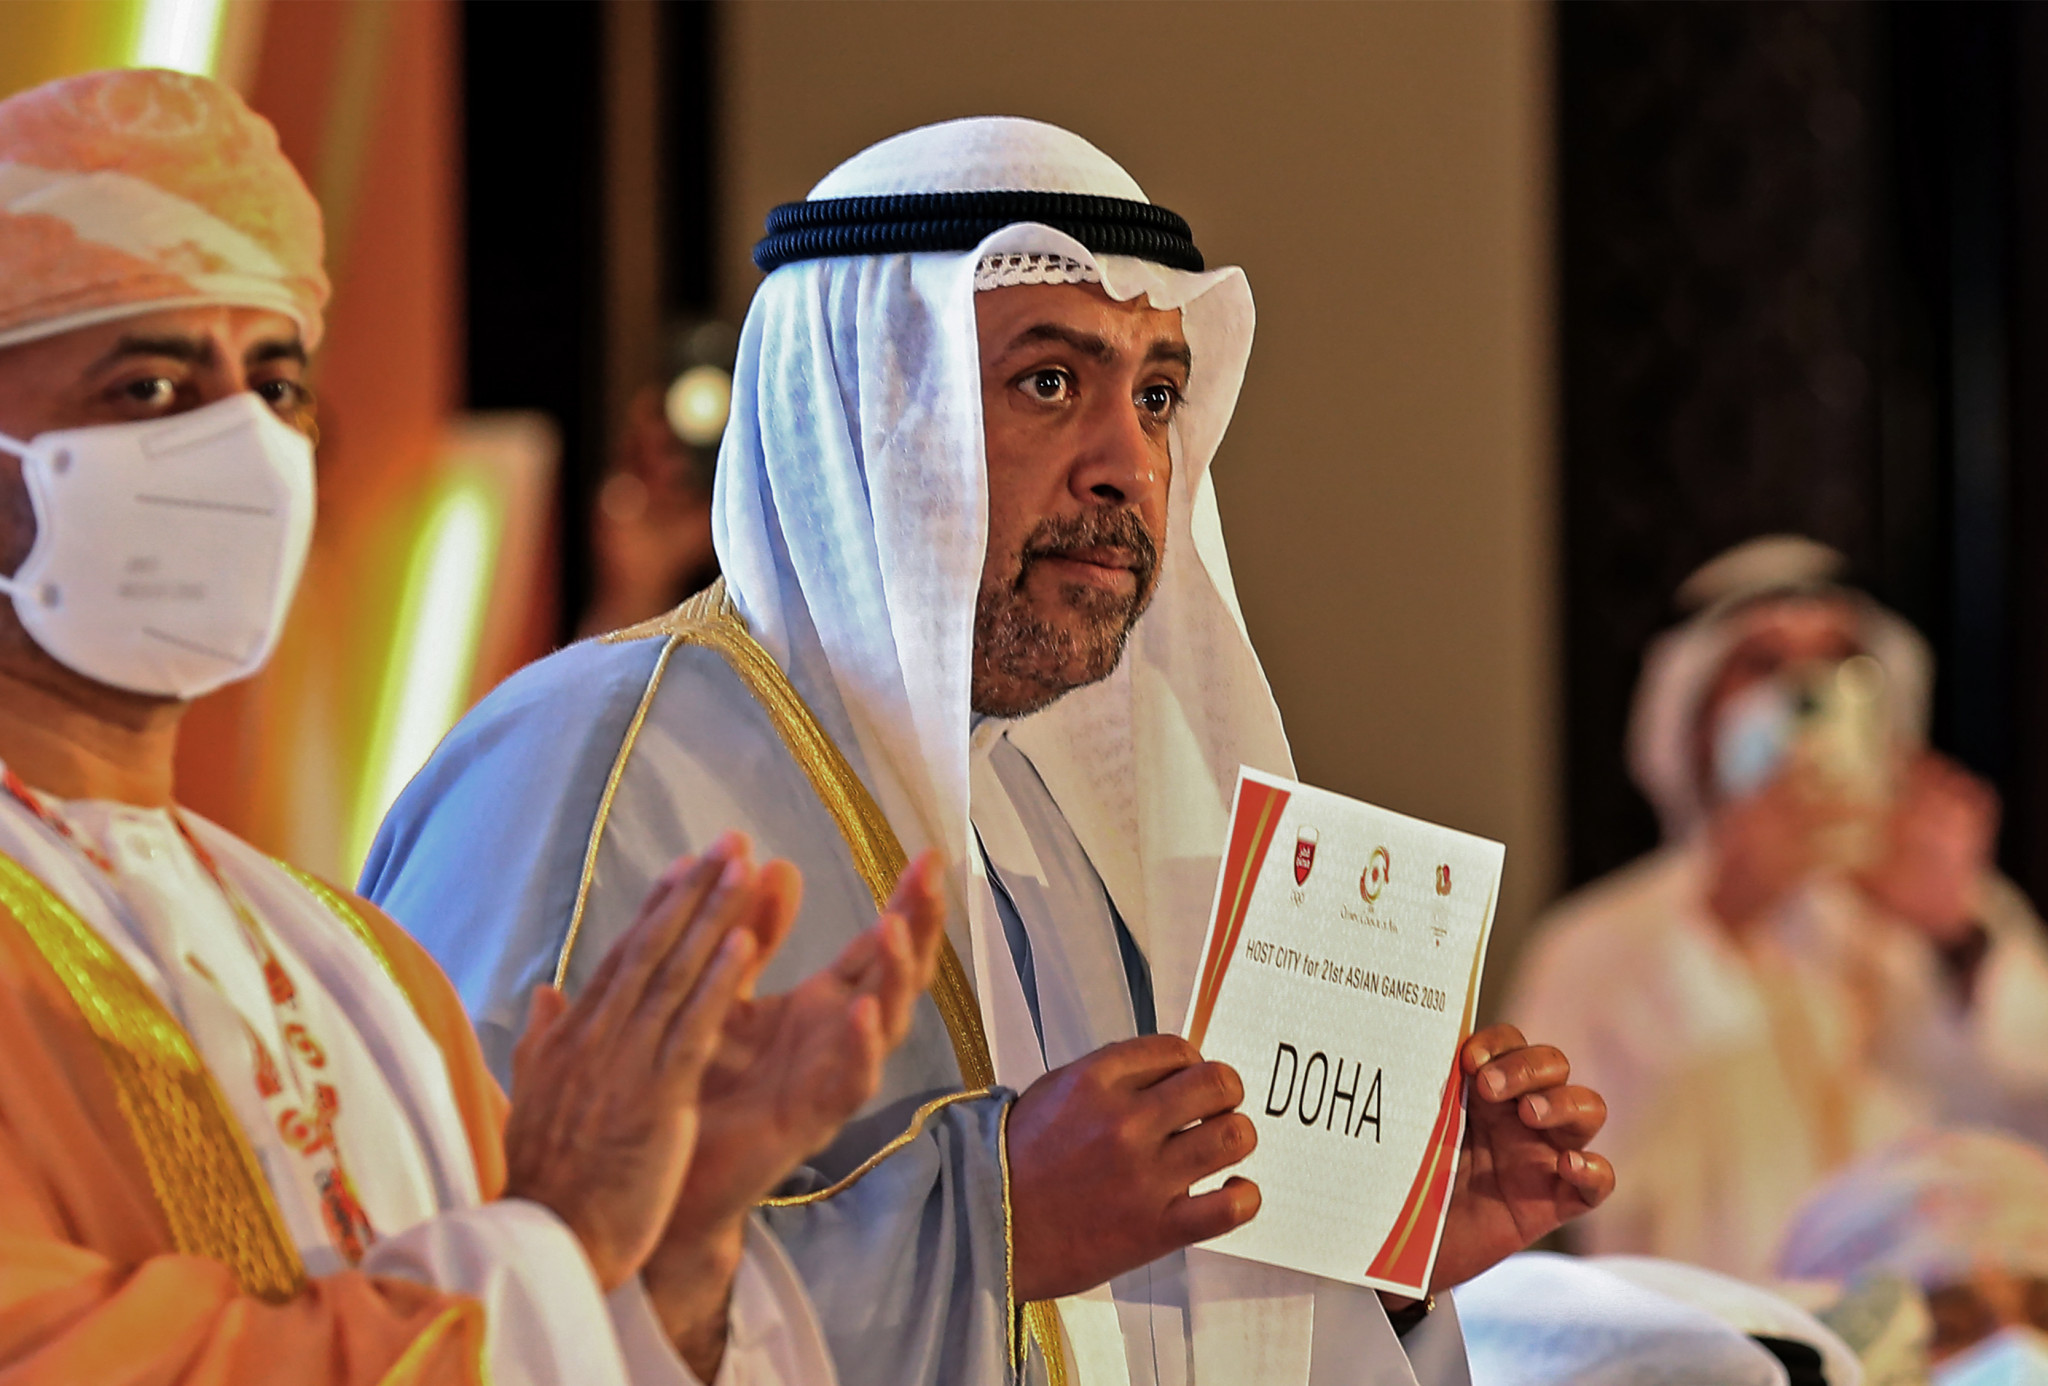 Doha will host the 2030 Asian Games with Riyadh awarded the 2034 edition ©OCA